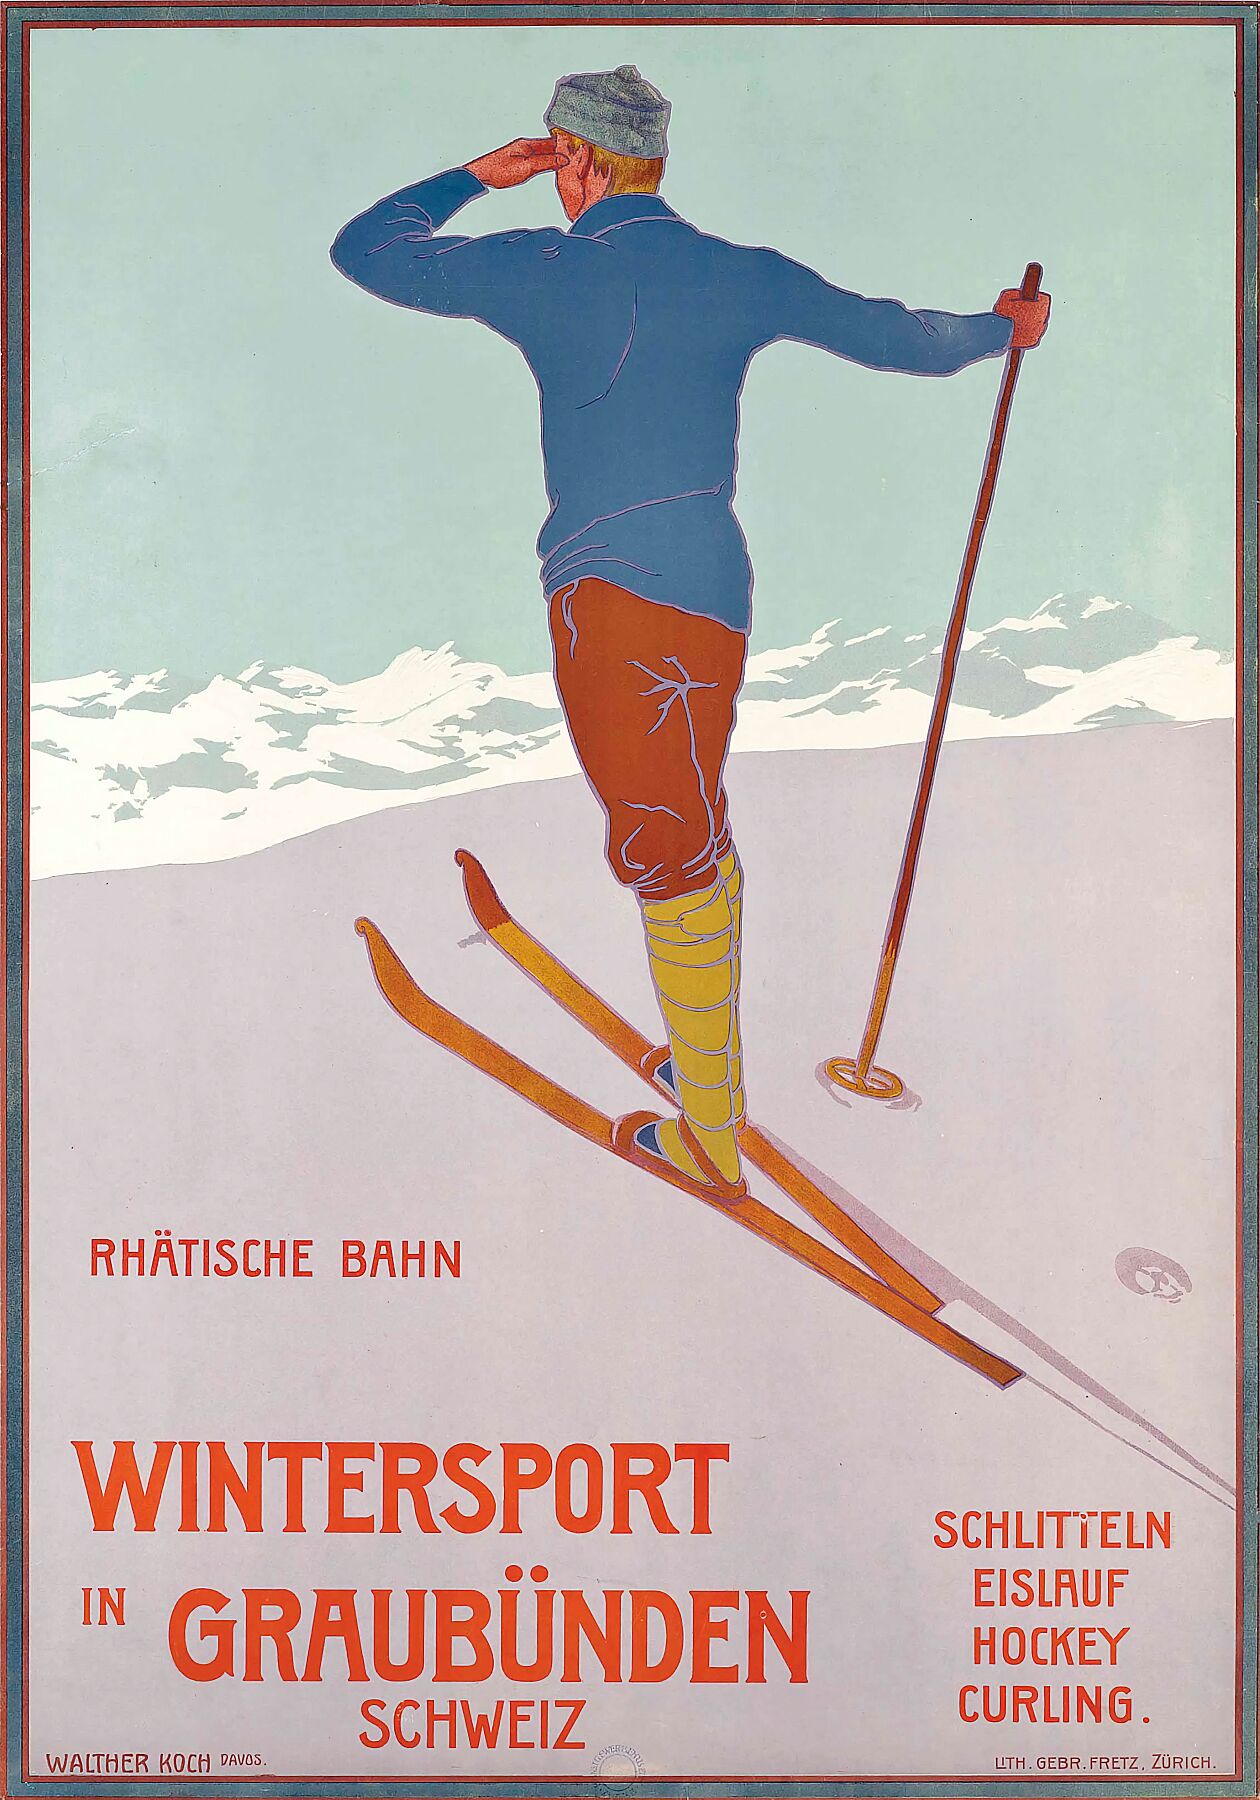 Wintersport in Graubünden by Walter Koch -  1906